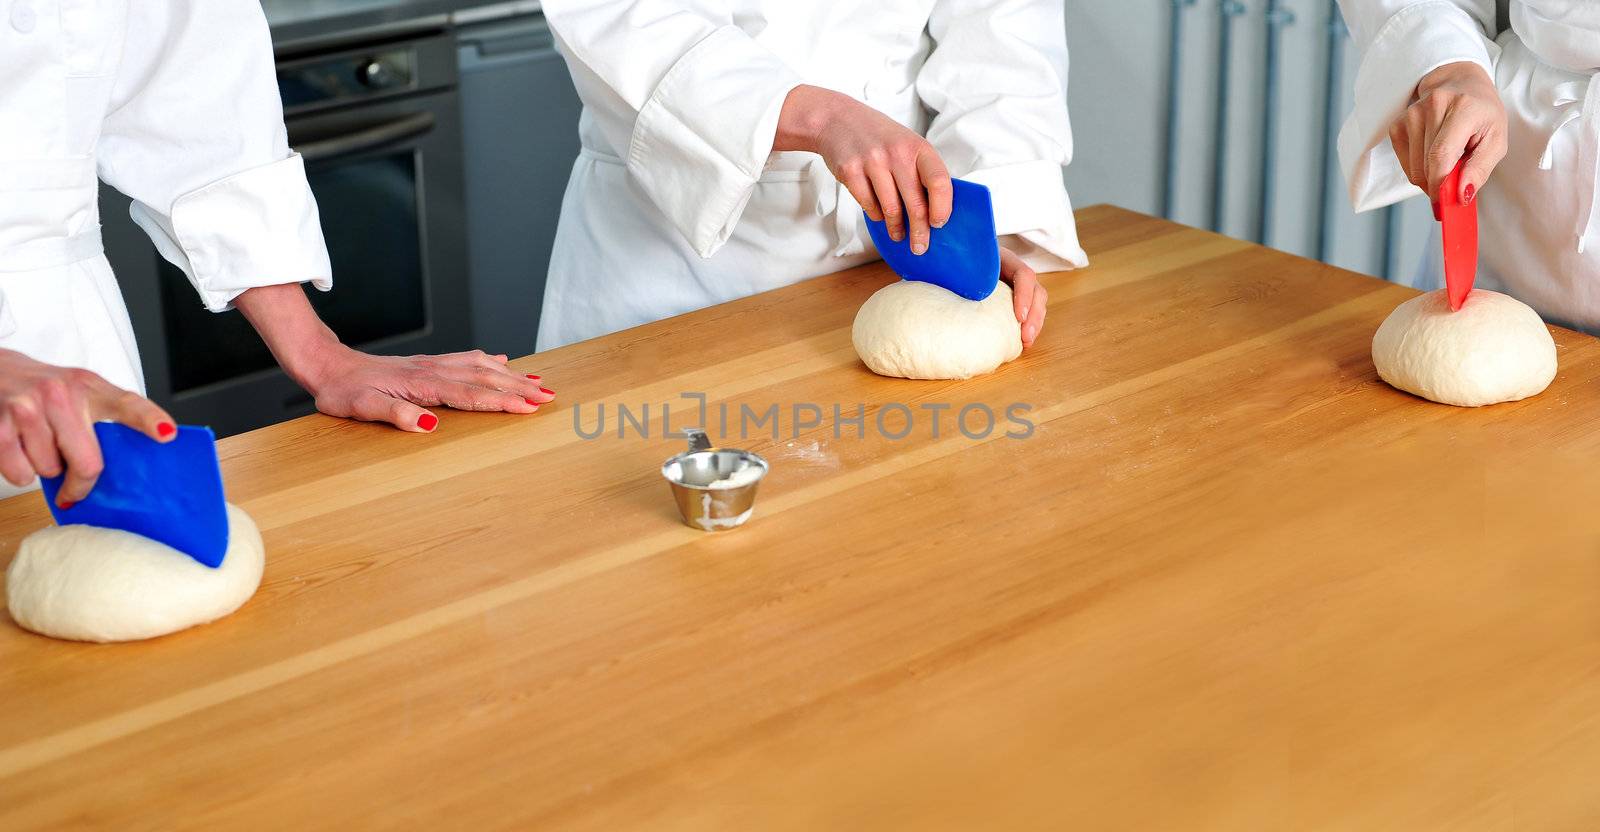 Women hands kneading dough. Bakery preparation